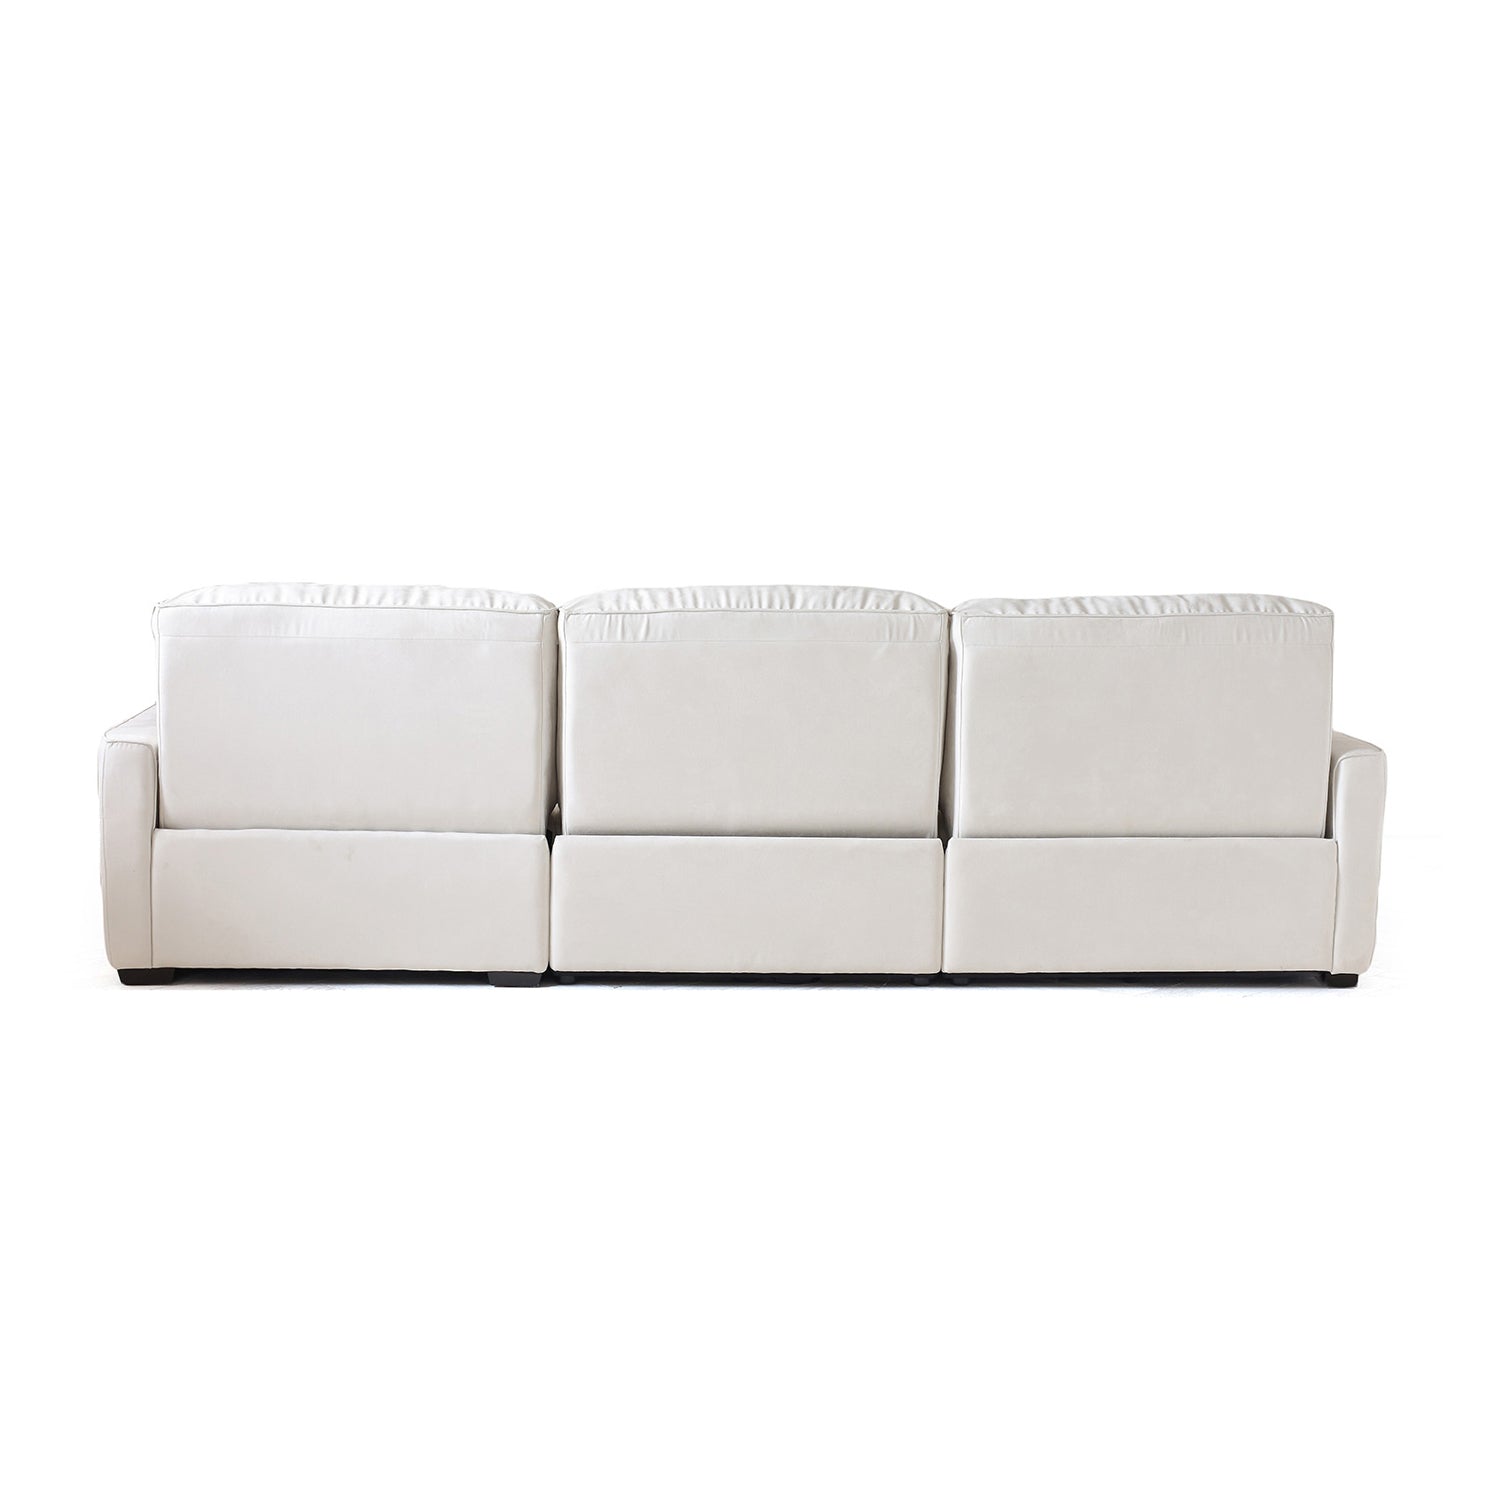 Intimo Recliner Sofa